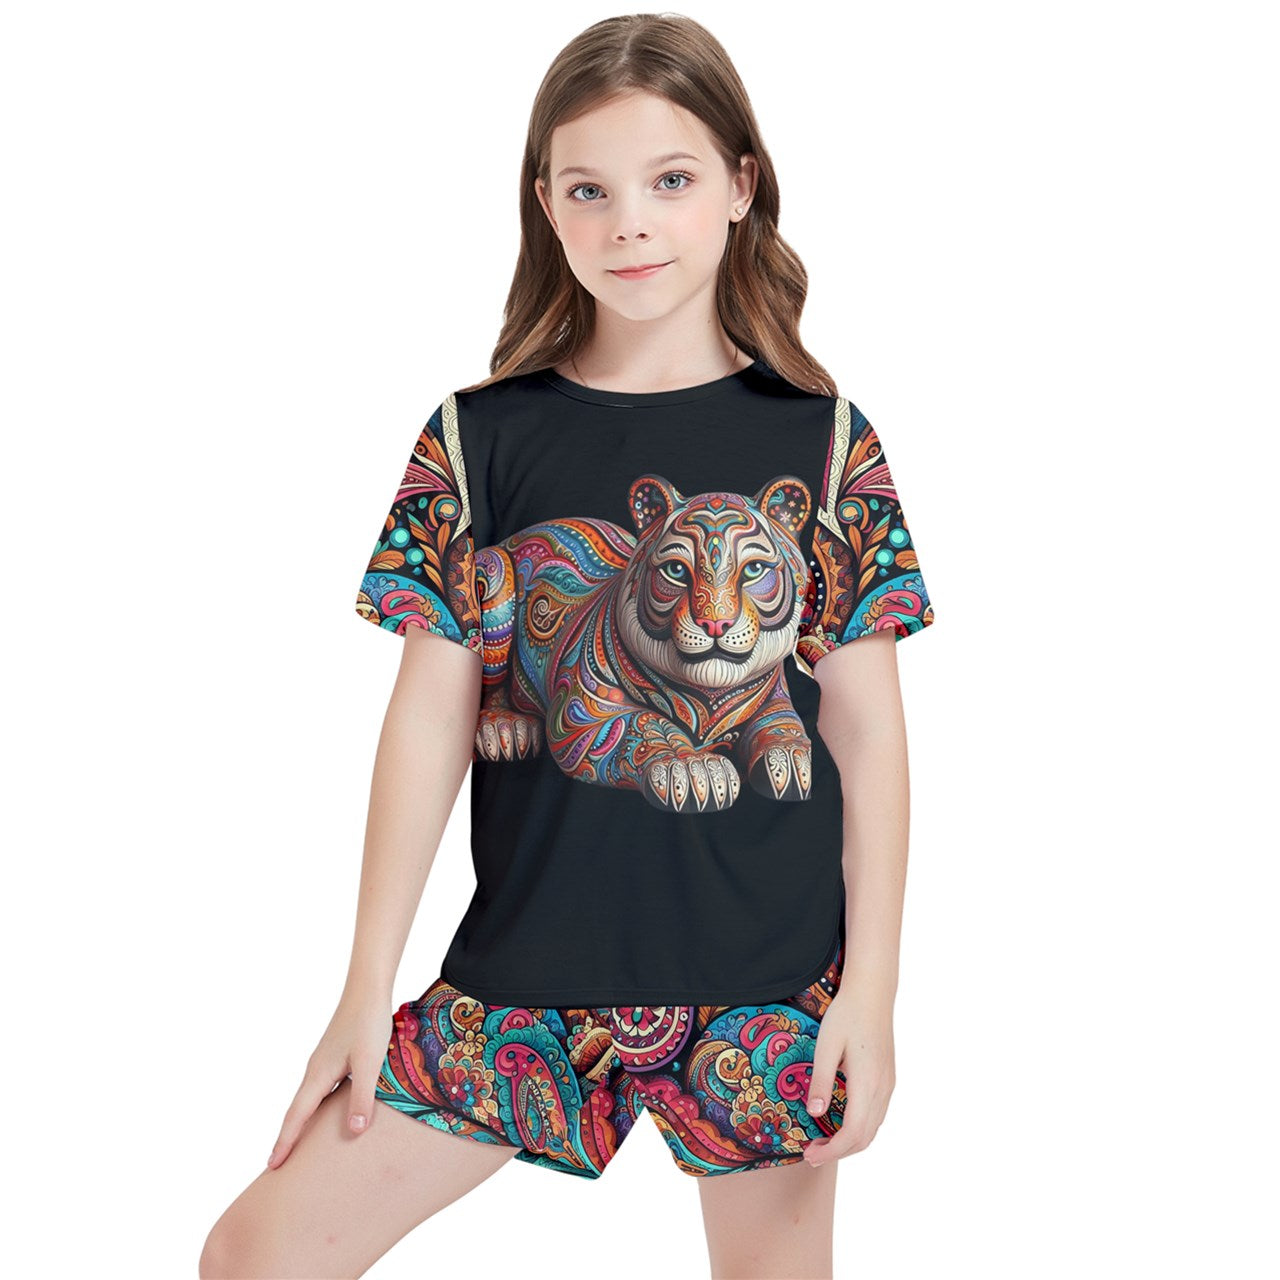 Paisley Tiger Girls' T-Shirt and Shorts Outfit Set